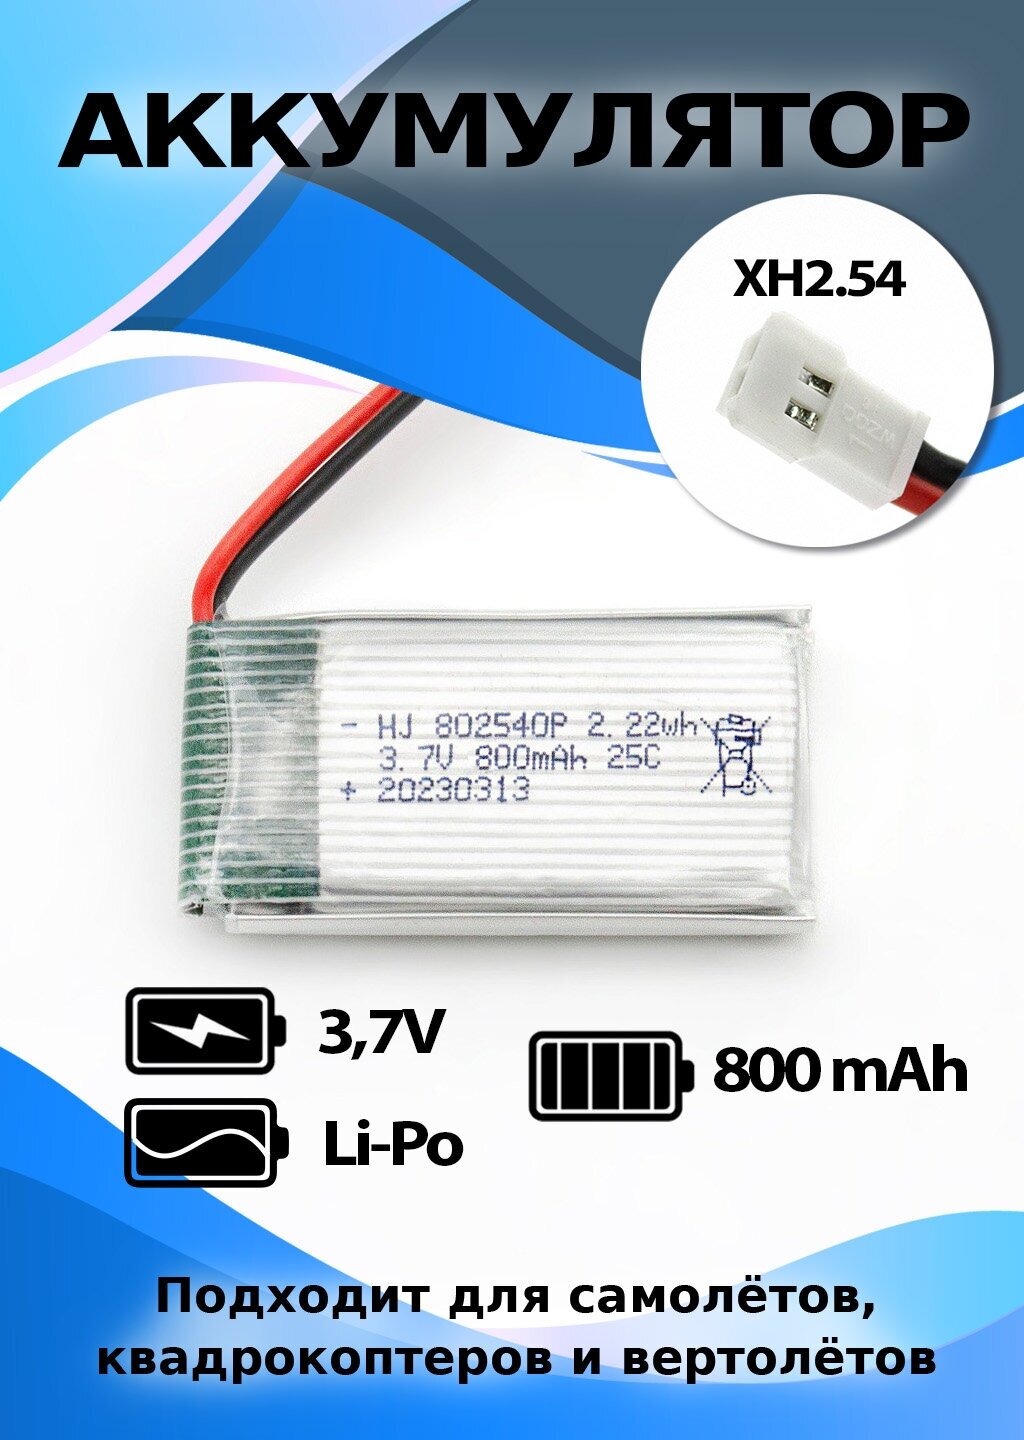 Аккумулятор литий-полимерный Li-Po 902540 37В 800мАч XH2.54